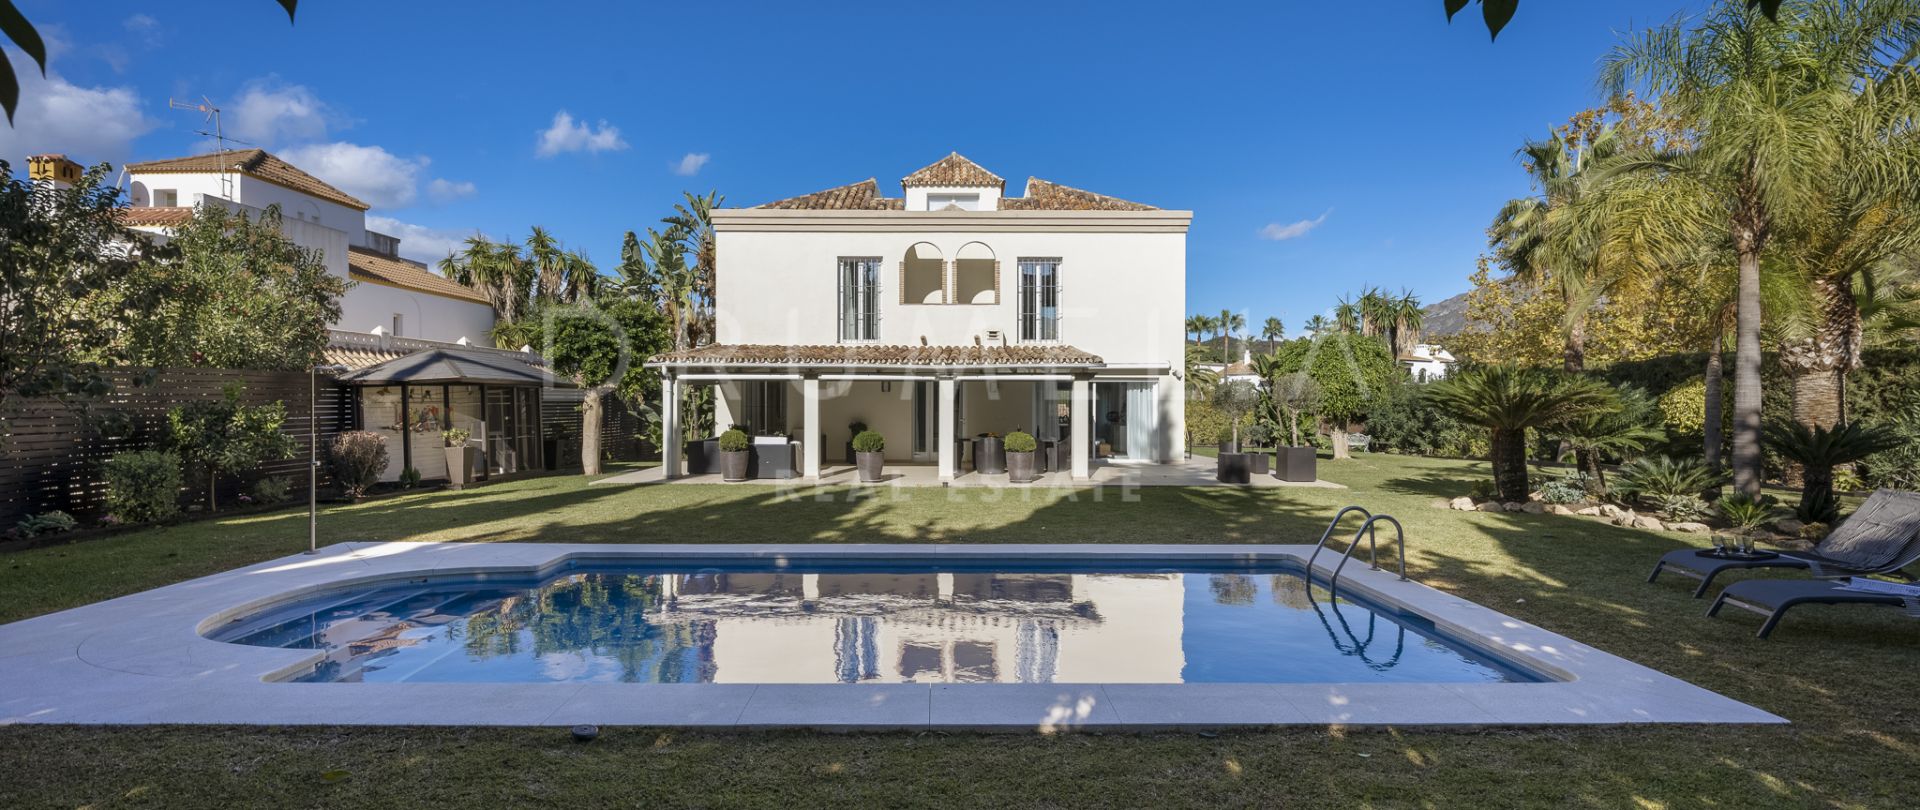 Beautiful renovated luxury villa with Swedish Lagom philosophy in Nueva Andalucia Marbella